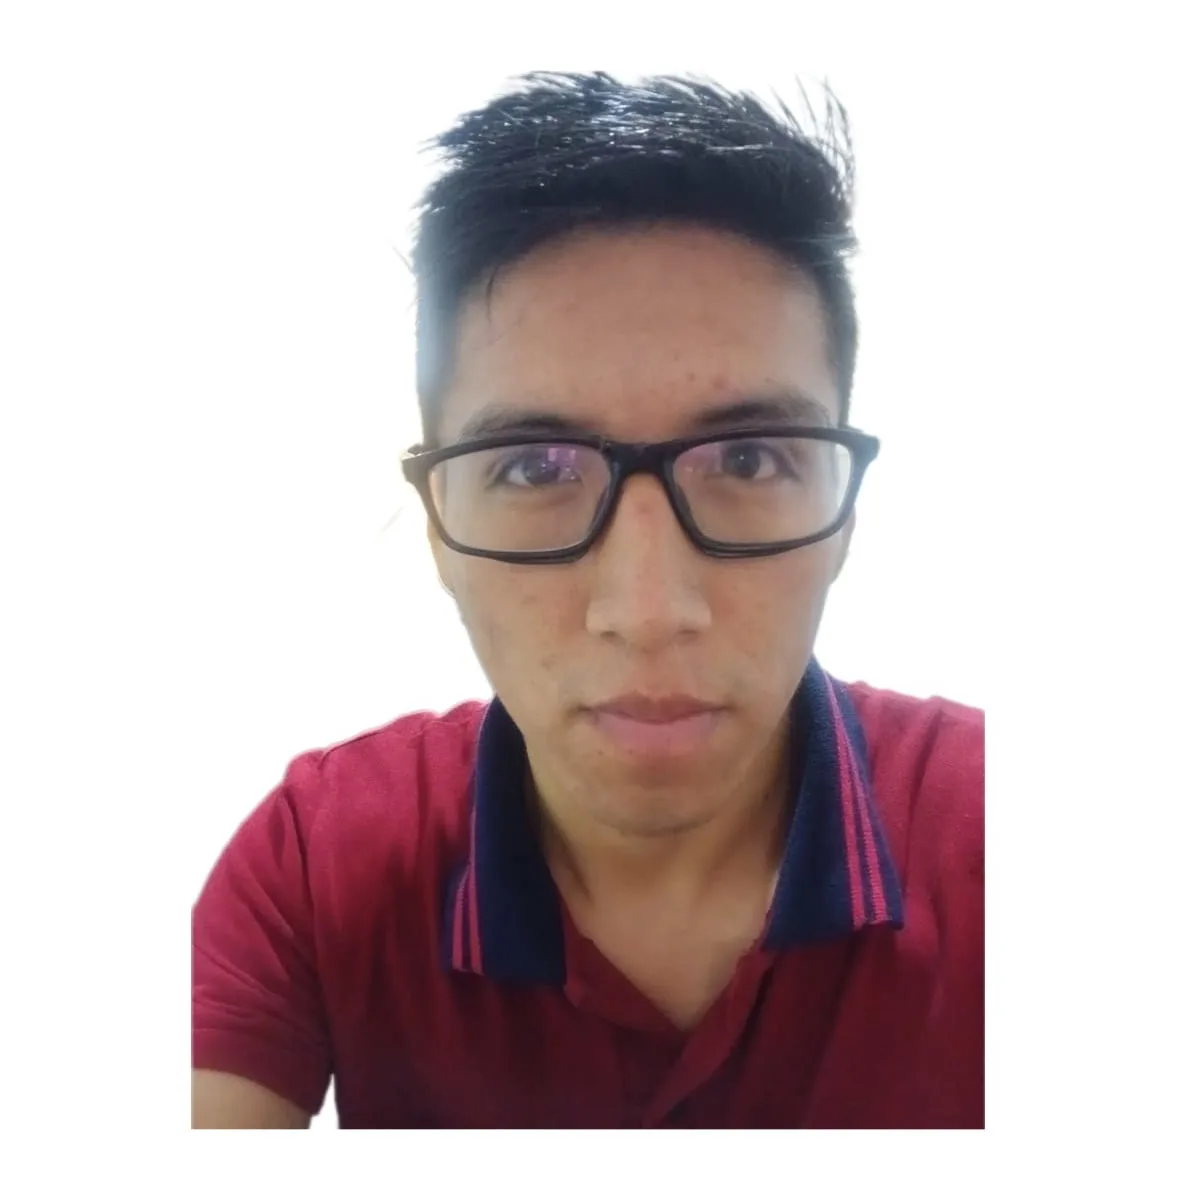 Edgar Alvarez's avatar